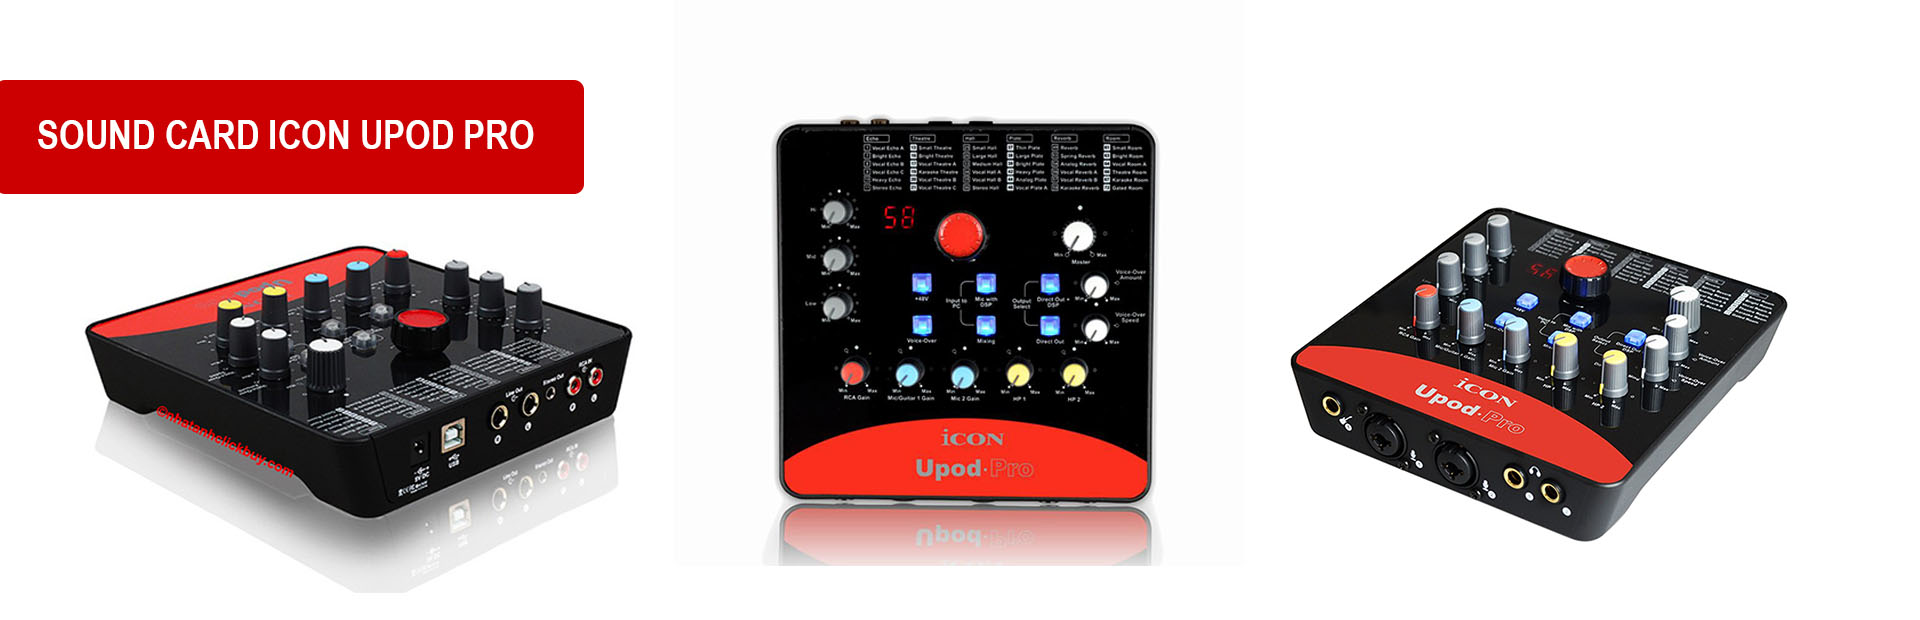 Sound card Icon Upod Pro trong combo thiết bị thu âm livestream